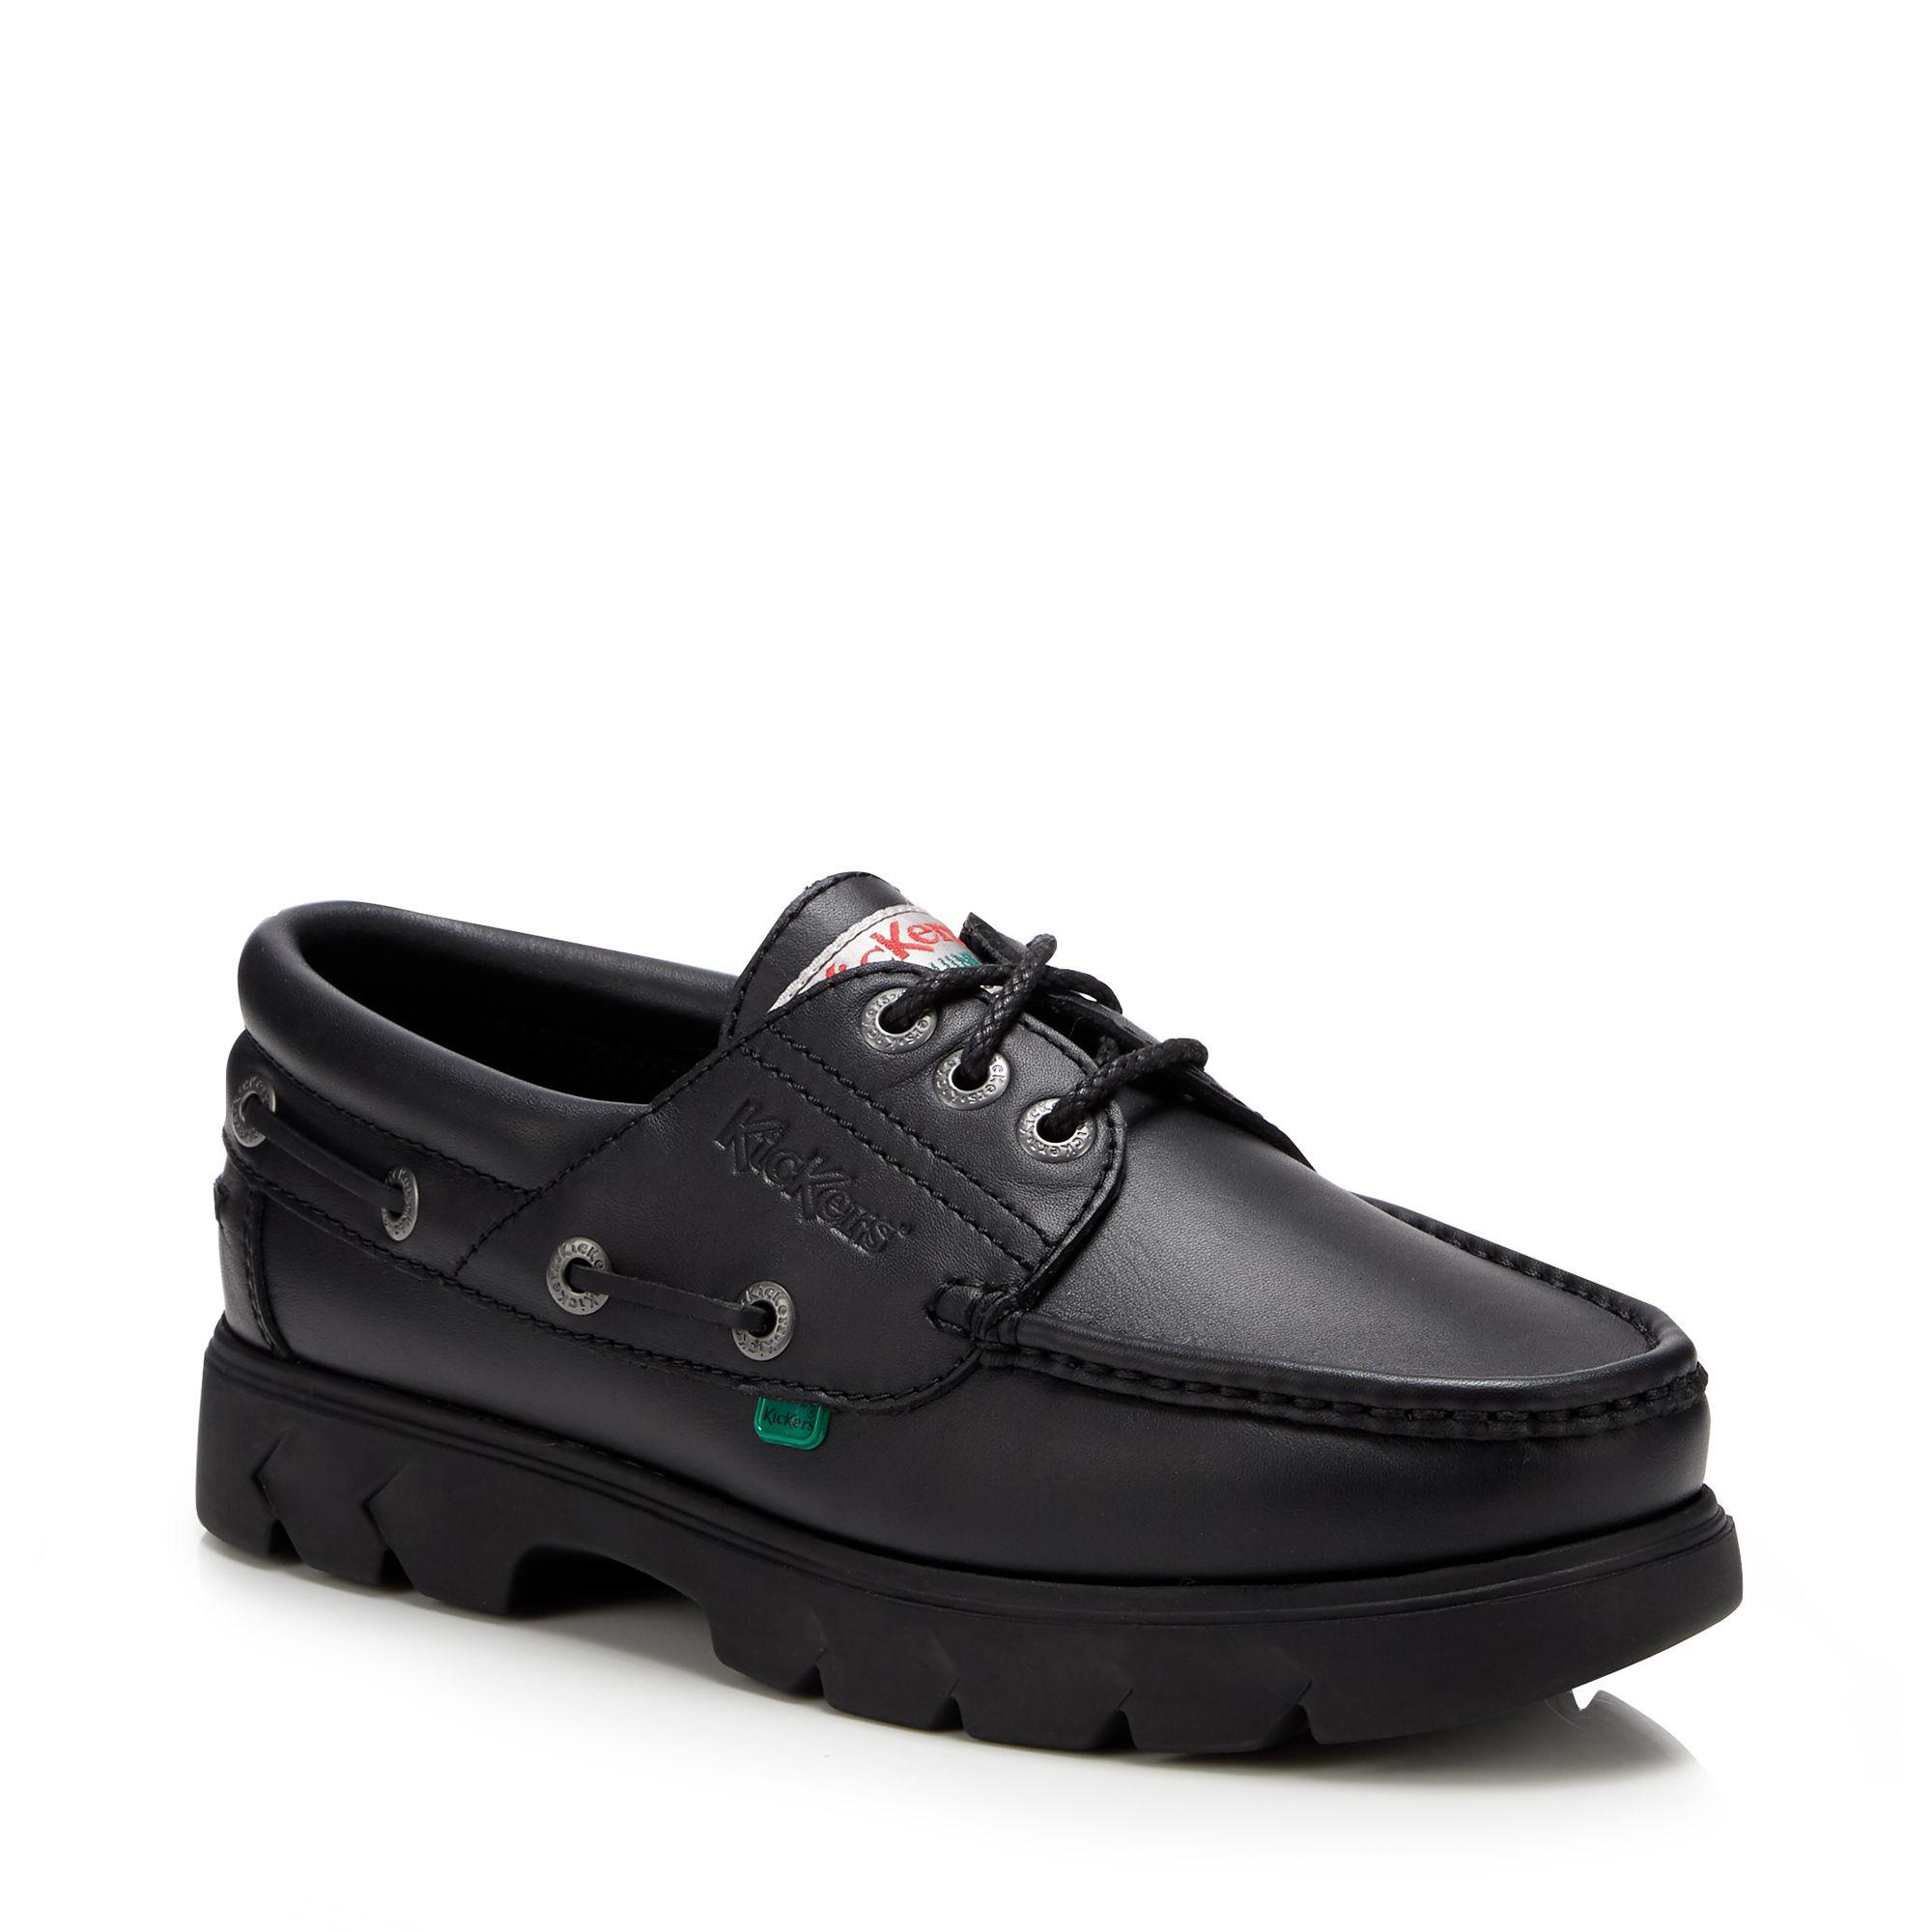 Kickers Men's Leather 'lennon' Boat Shoes in Black for Men - Lyst